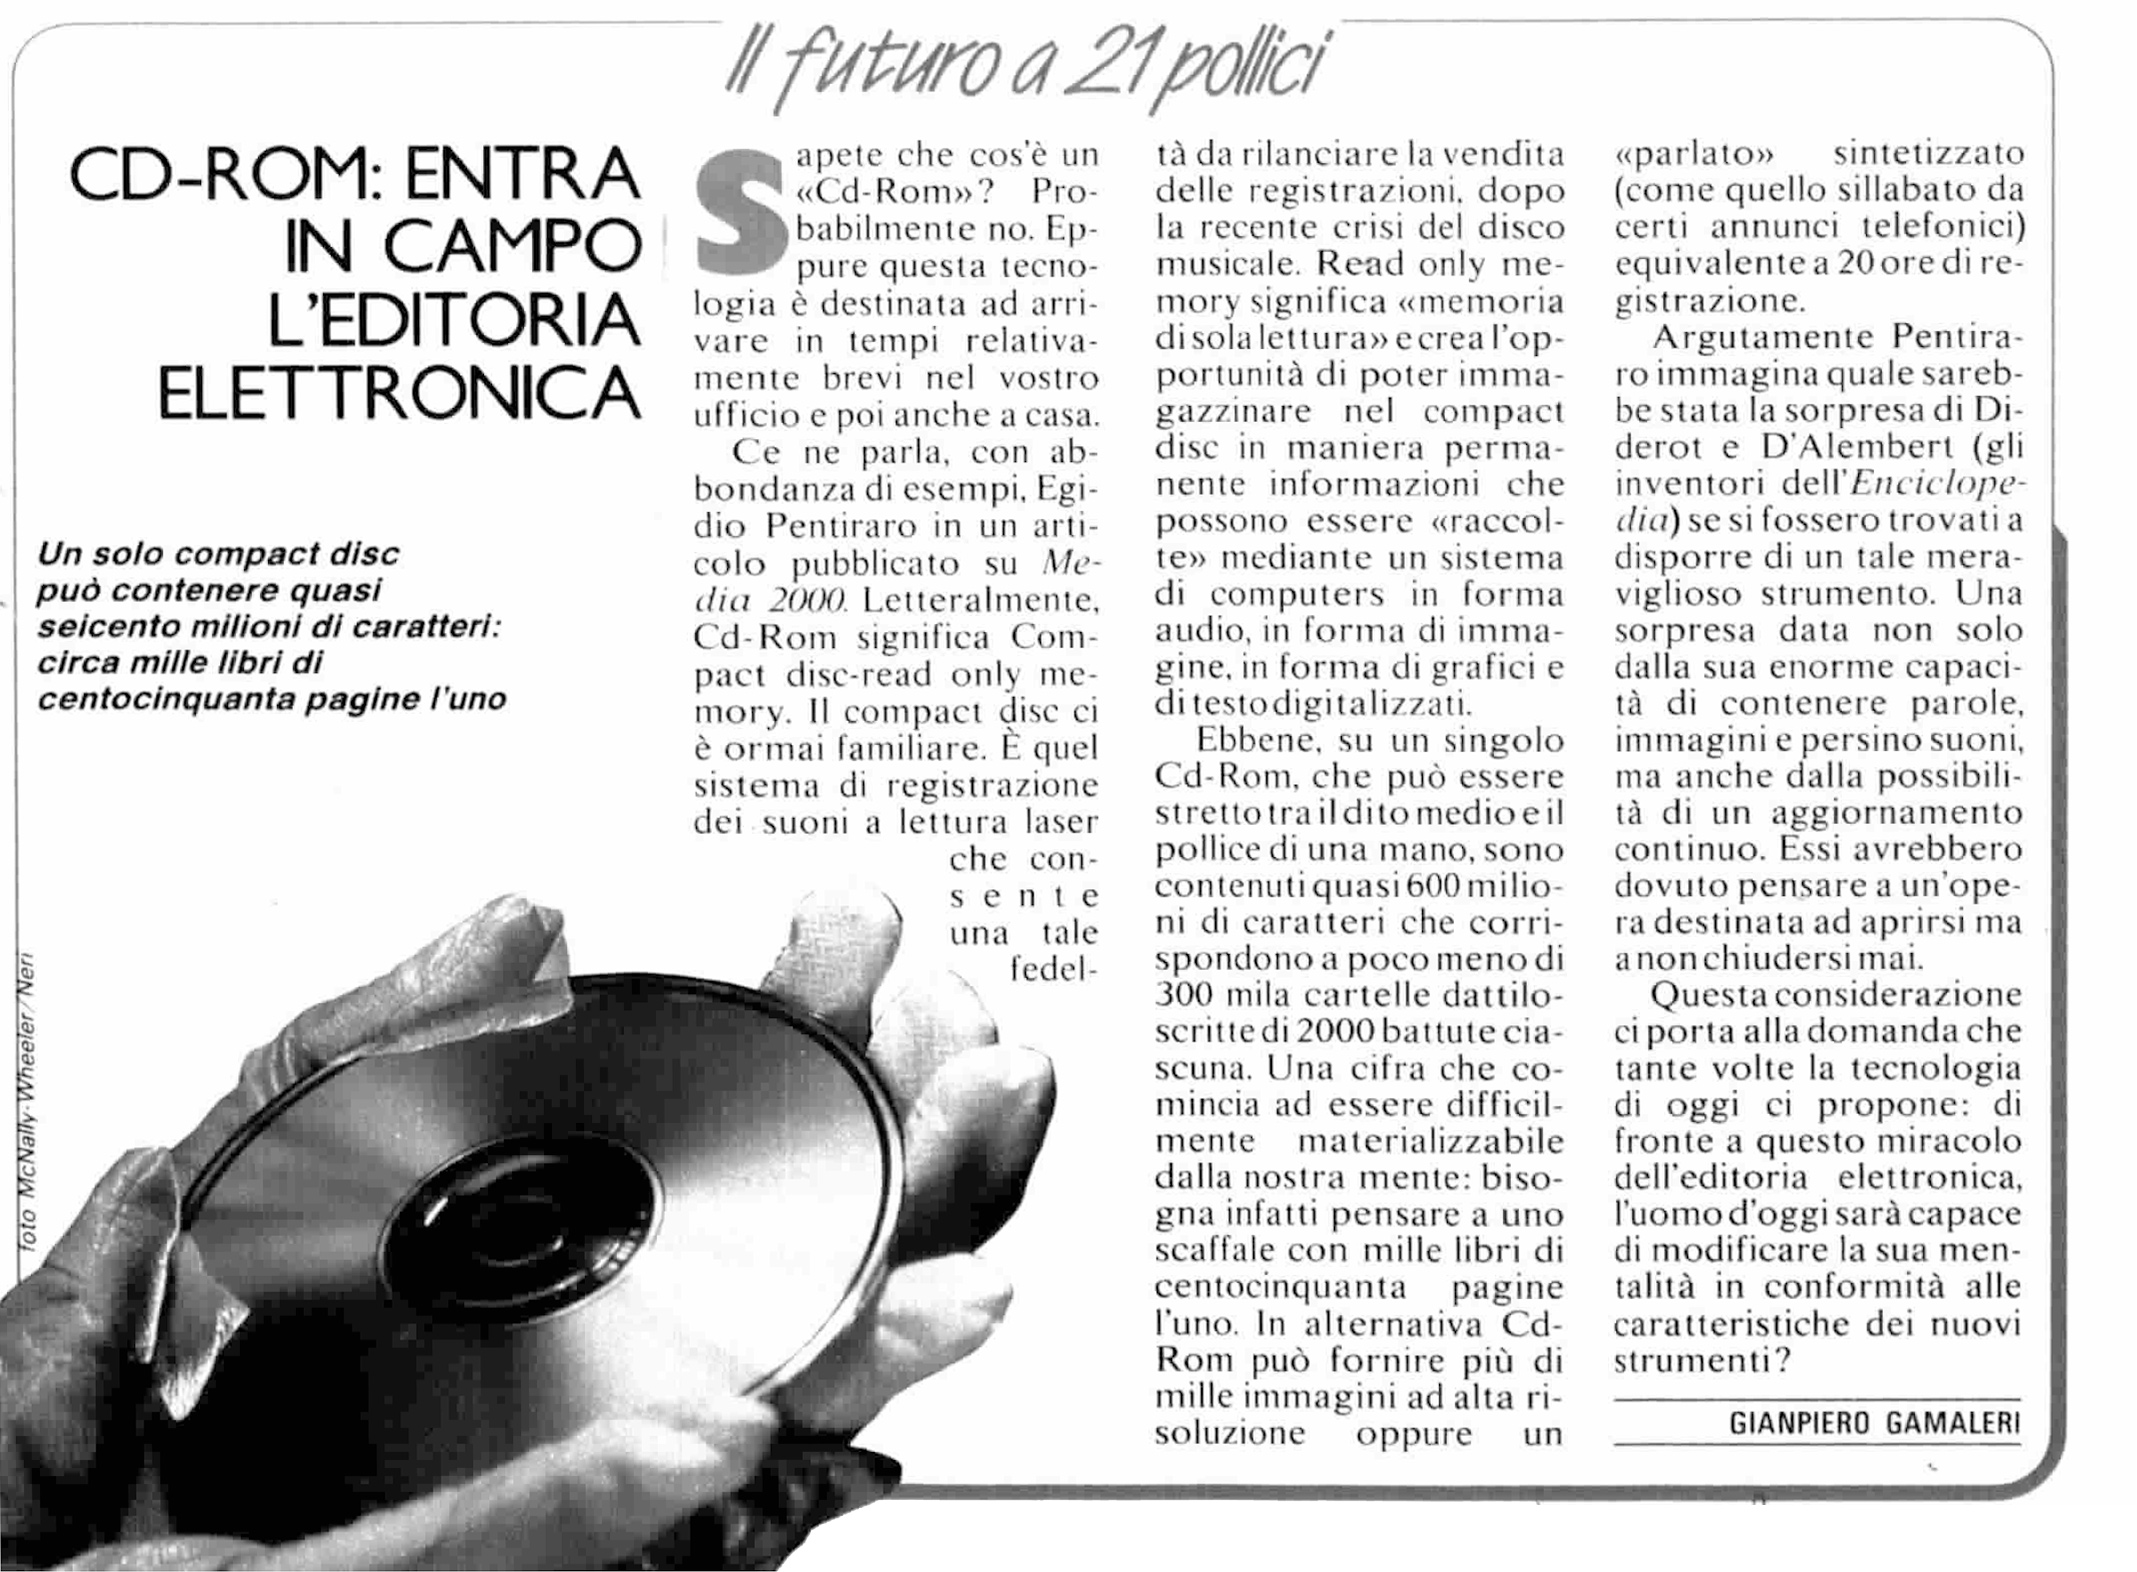 Radiocorriere TV, 1984.